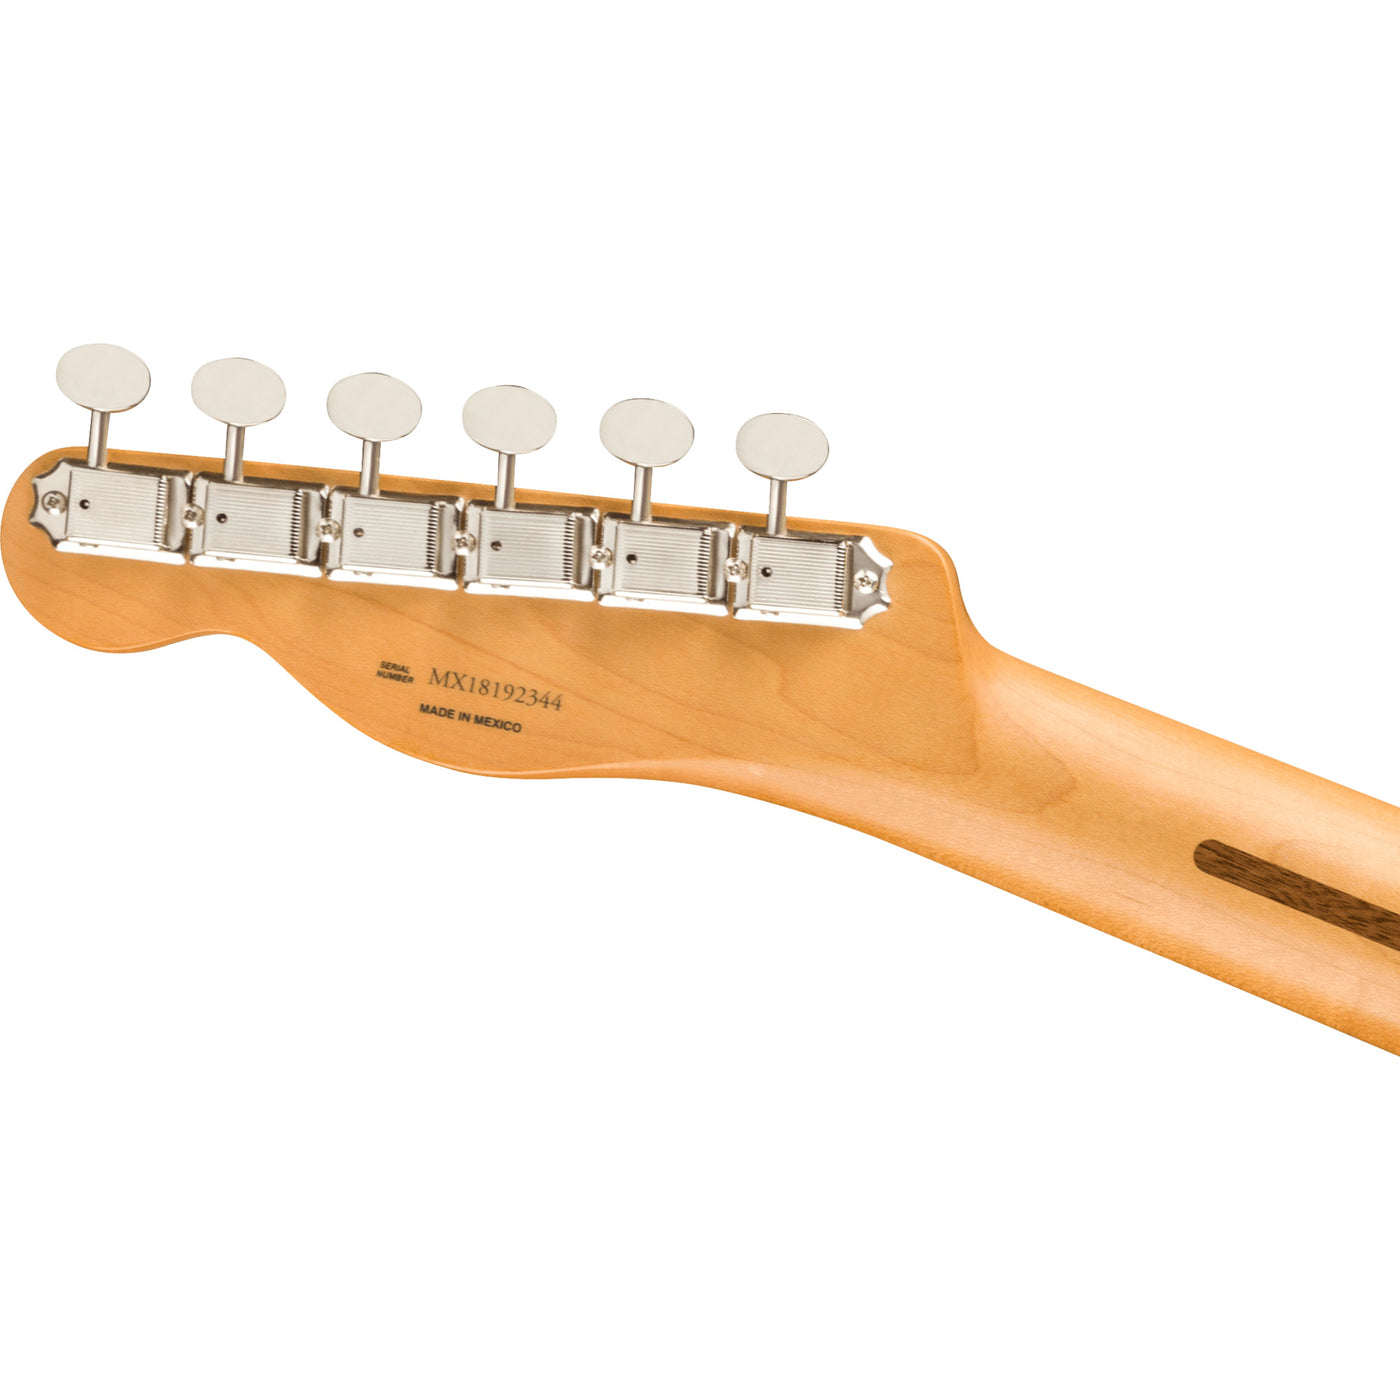 Fender Vintera ‘50s Telecaster Modified Electric Guitar, Daphne Blue (0149862304)